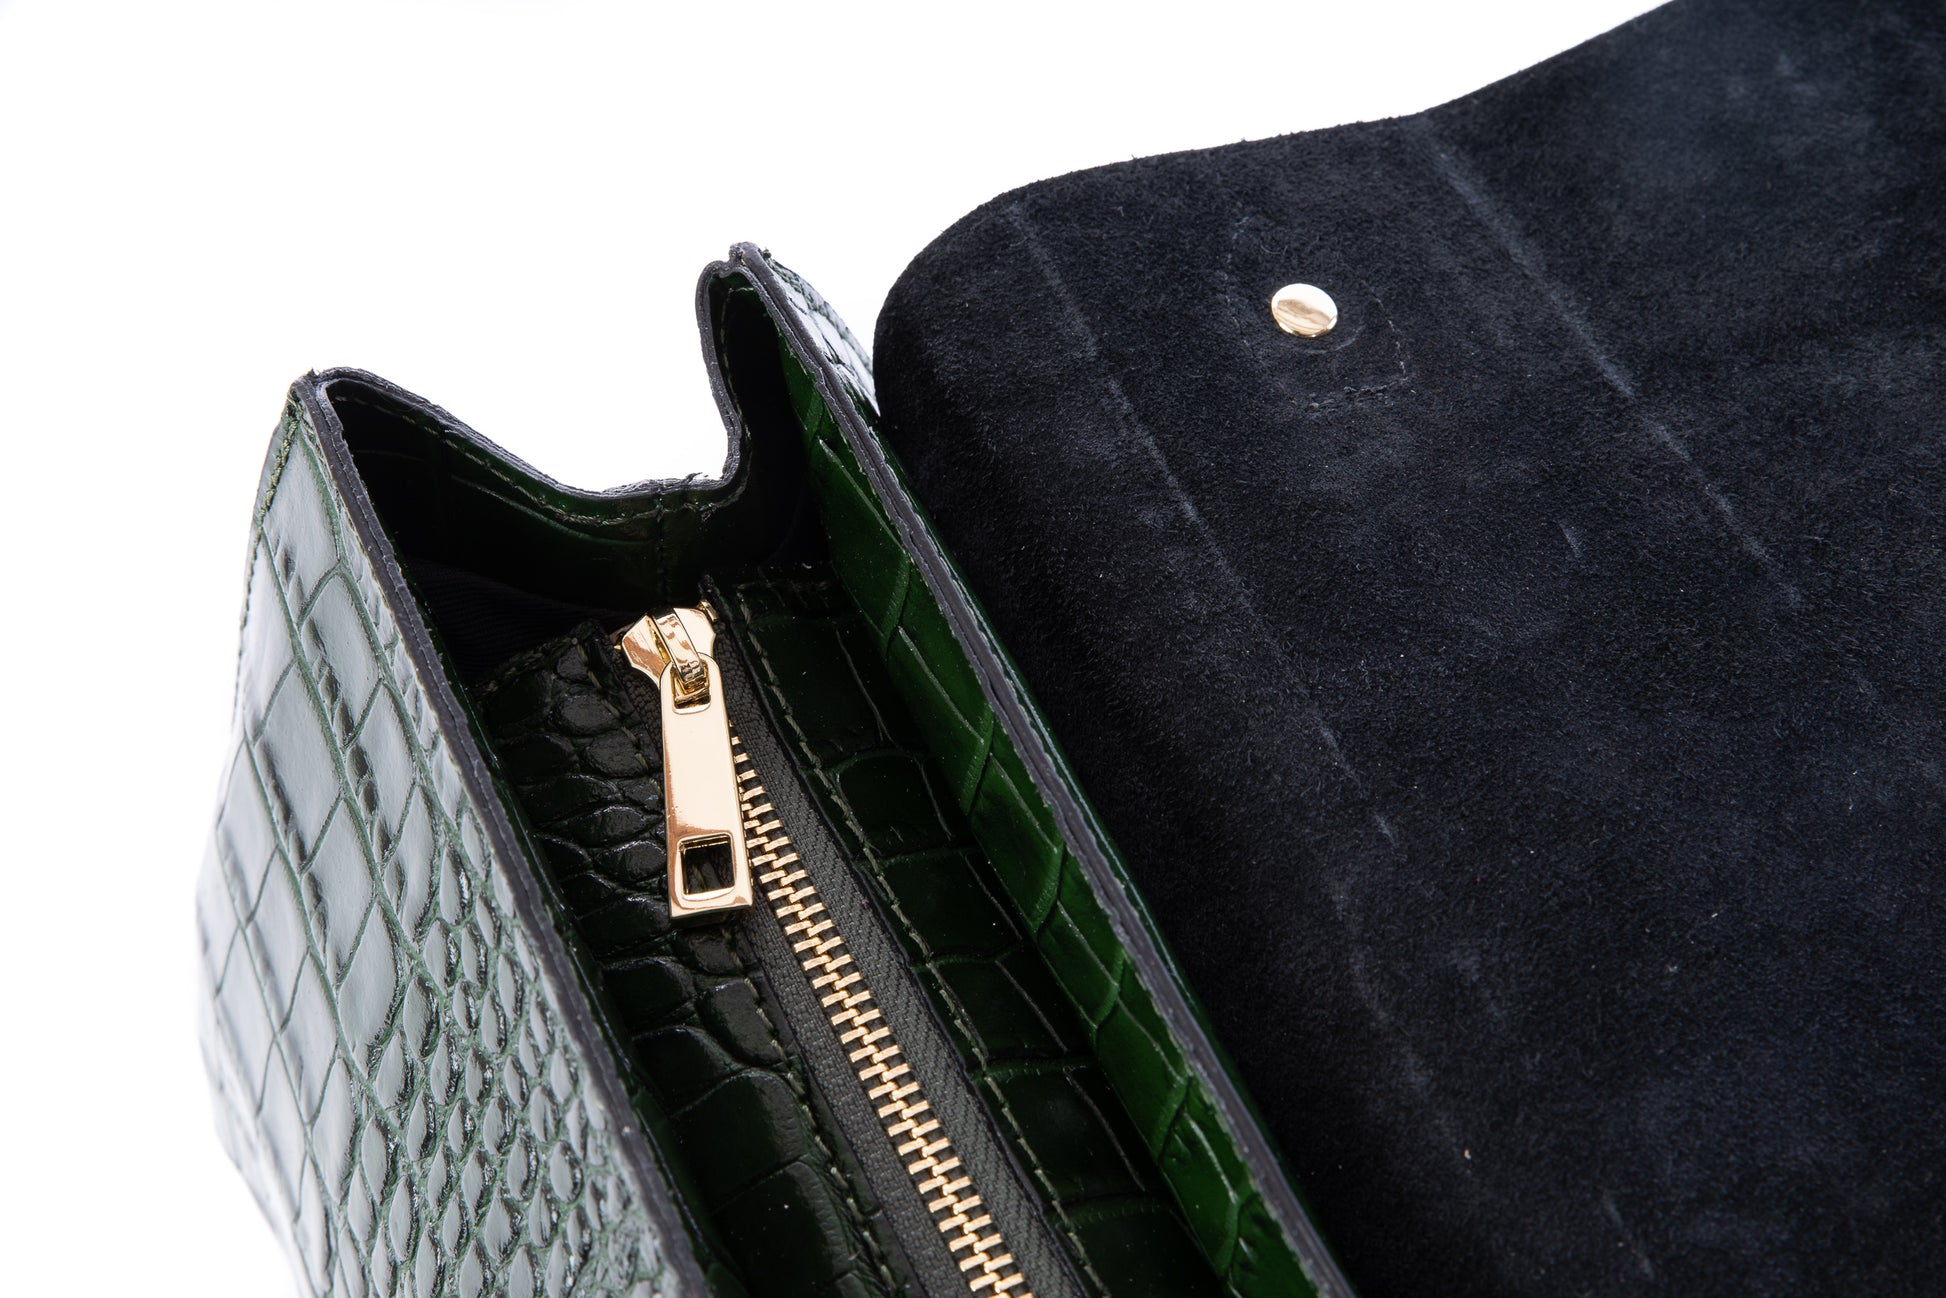 Dark Bottle Green Italian Leather Croc Satchel Tote Bag - Amilu